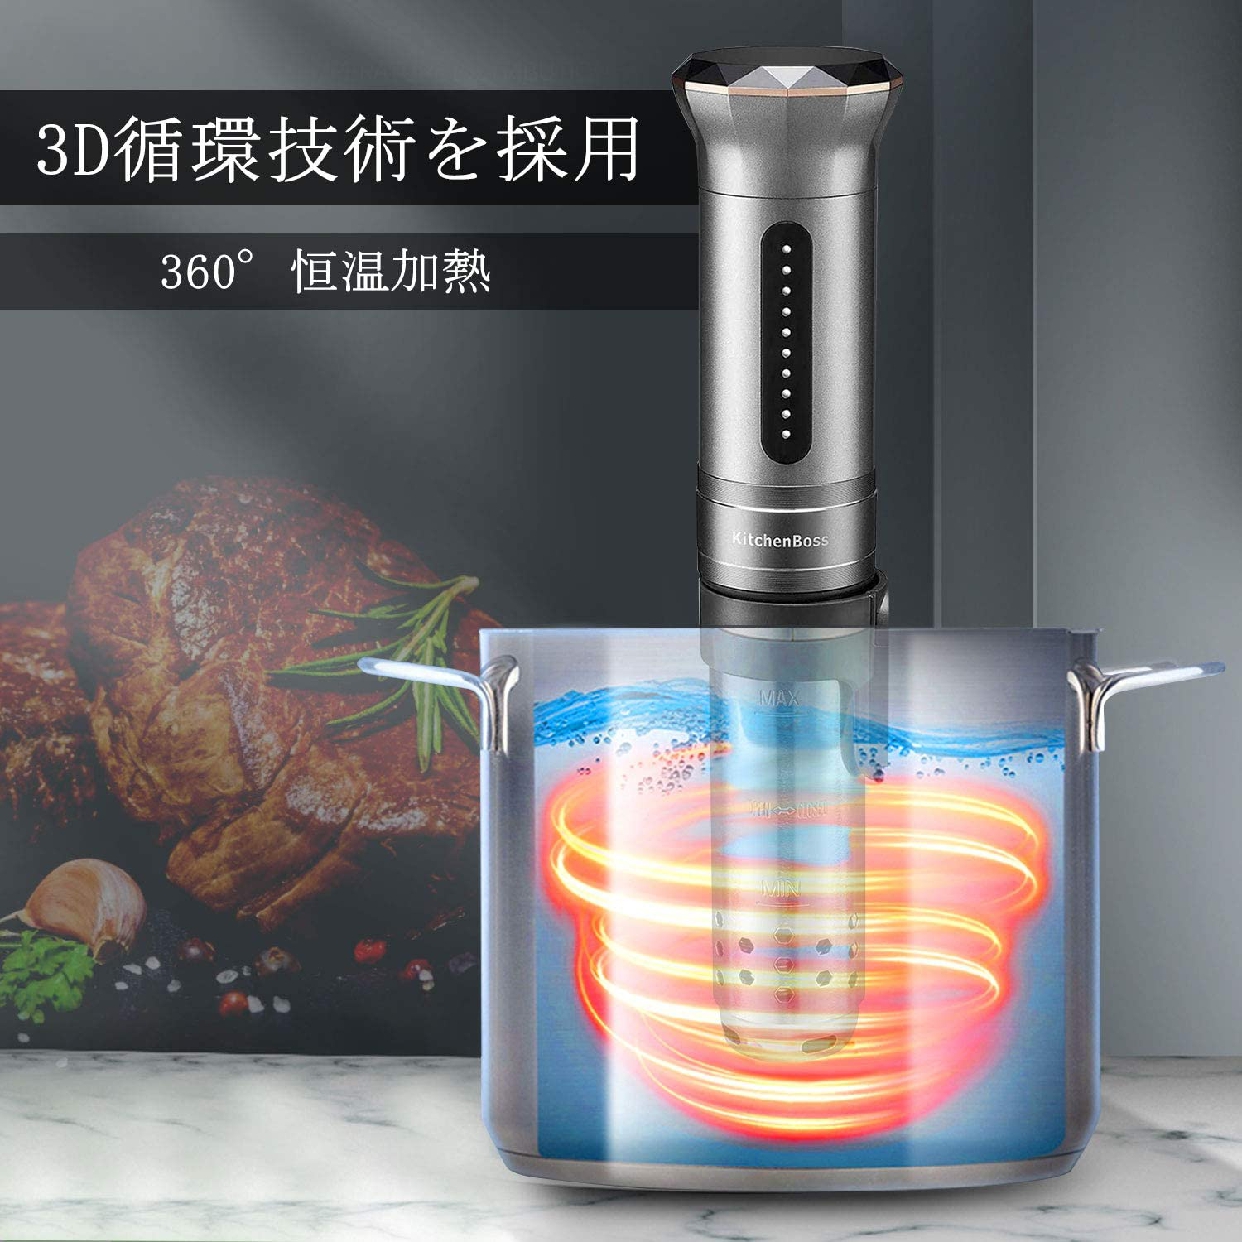 KitchenBoss(キッチンボス) 低温調理器 G300の商品画像サムネ3 